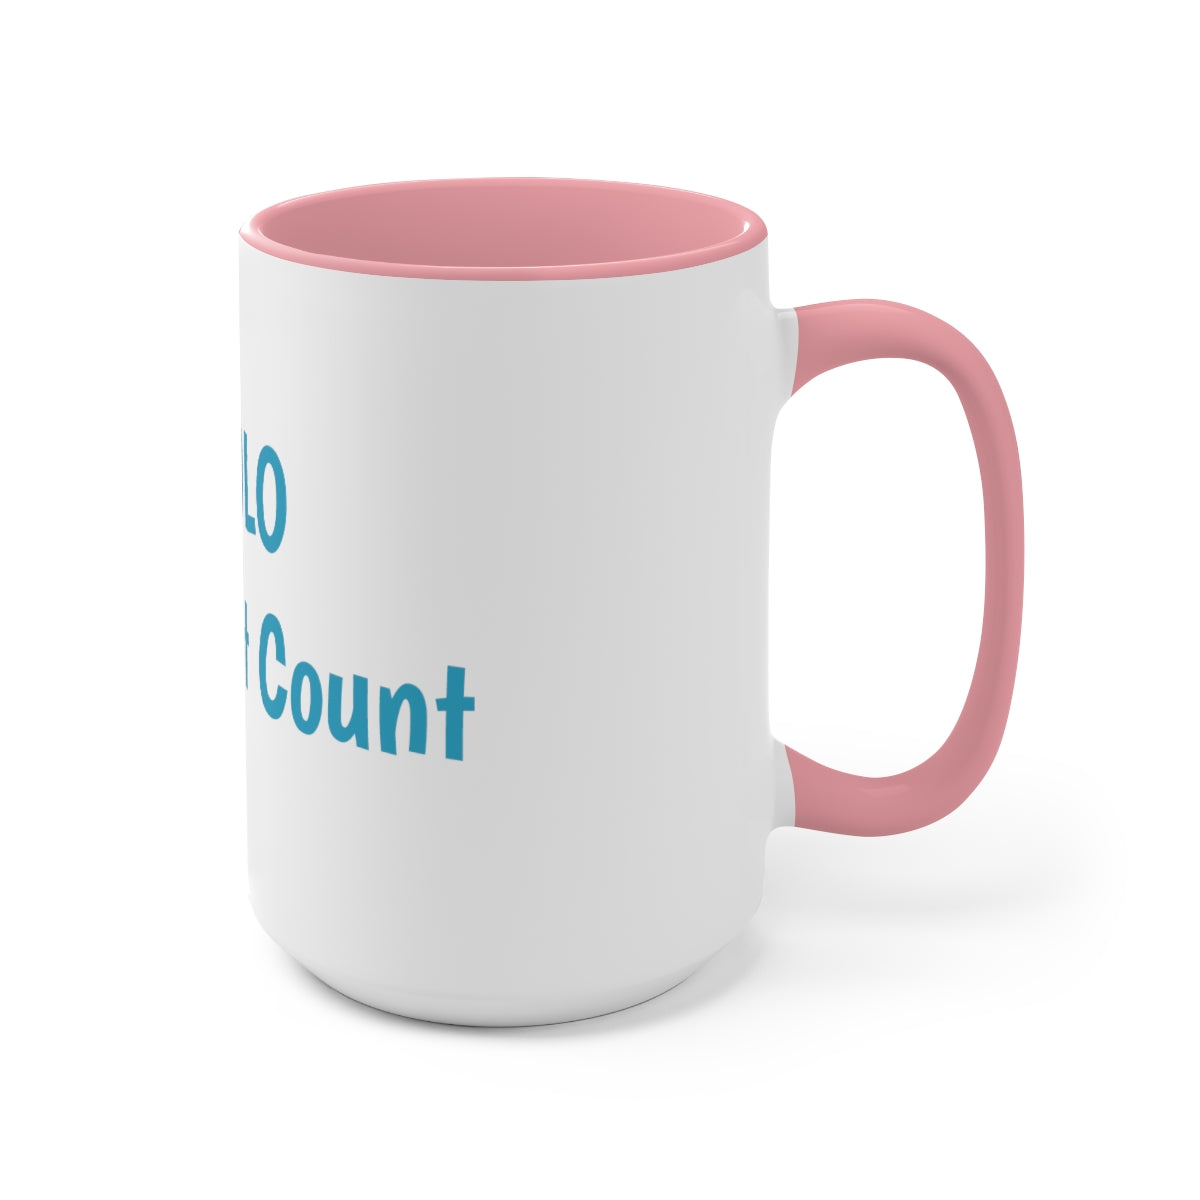 15 oz - YOLO Make it Count - Two-Tone Coffee Mugs